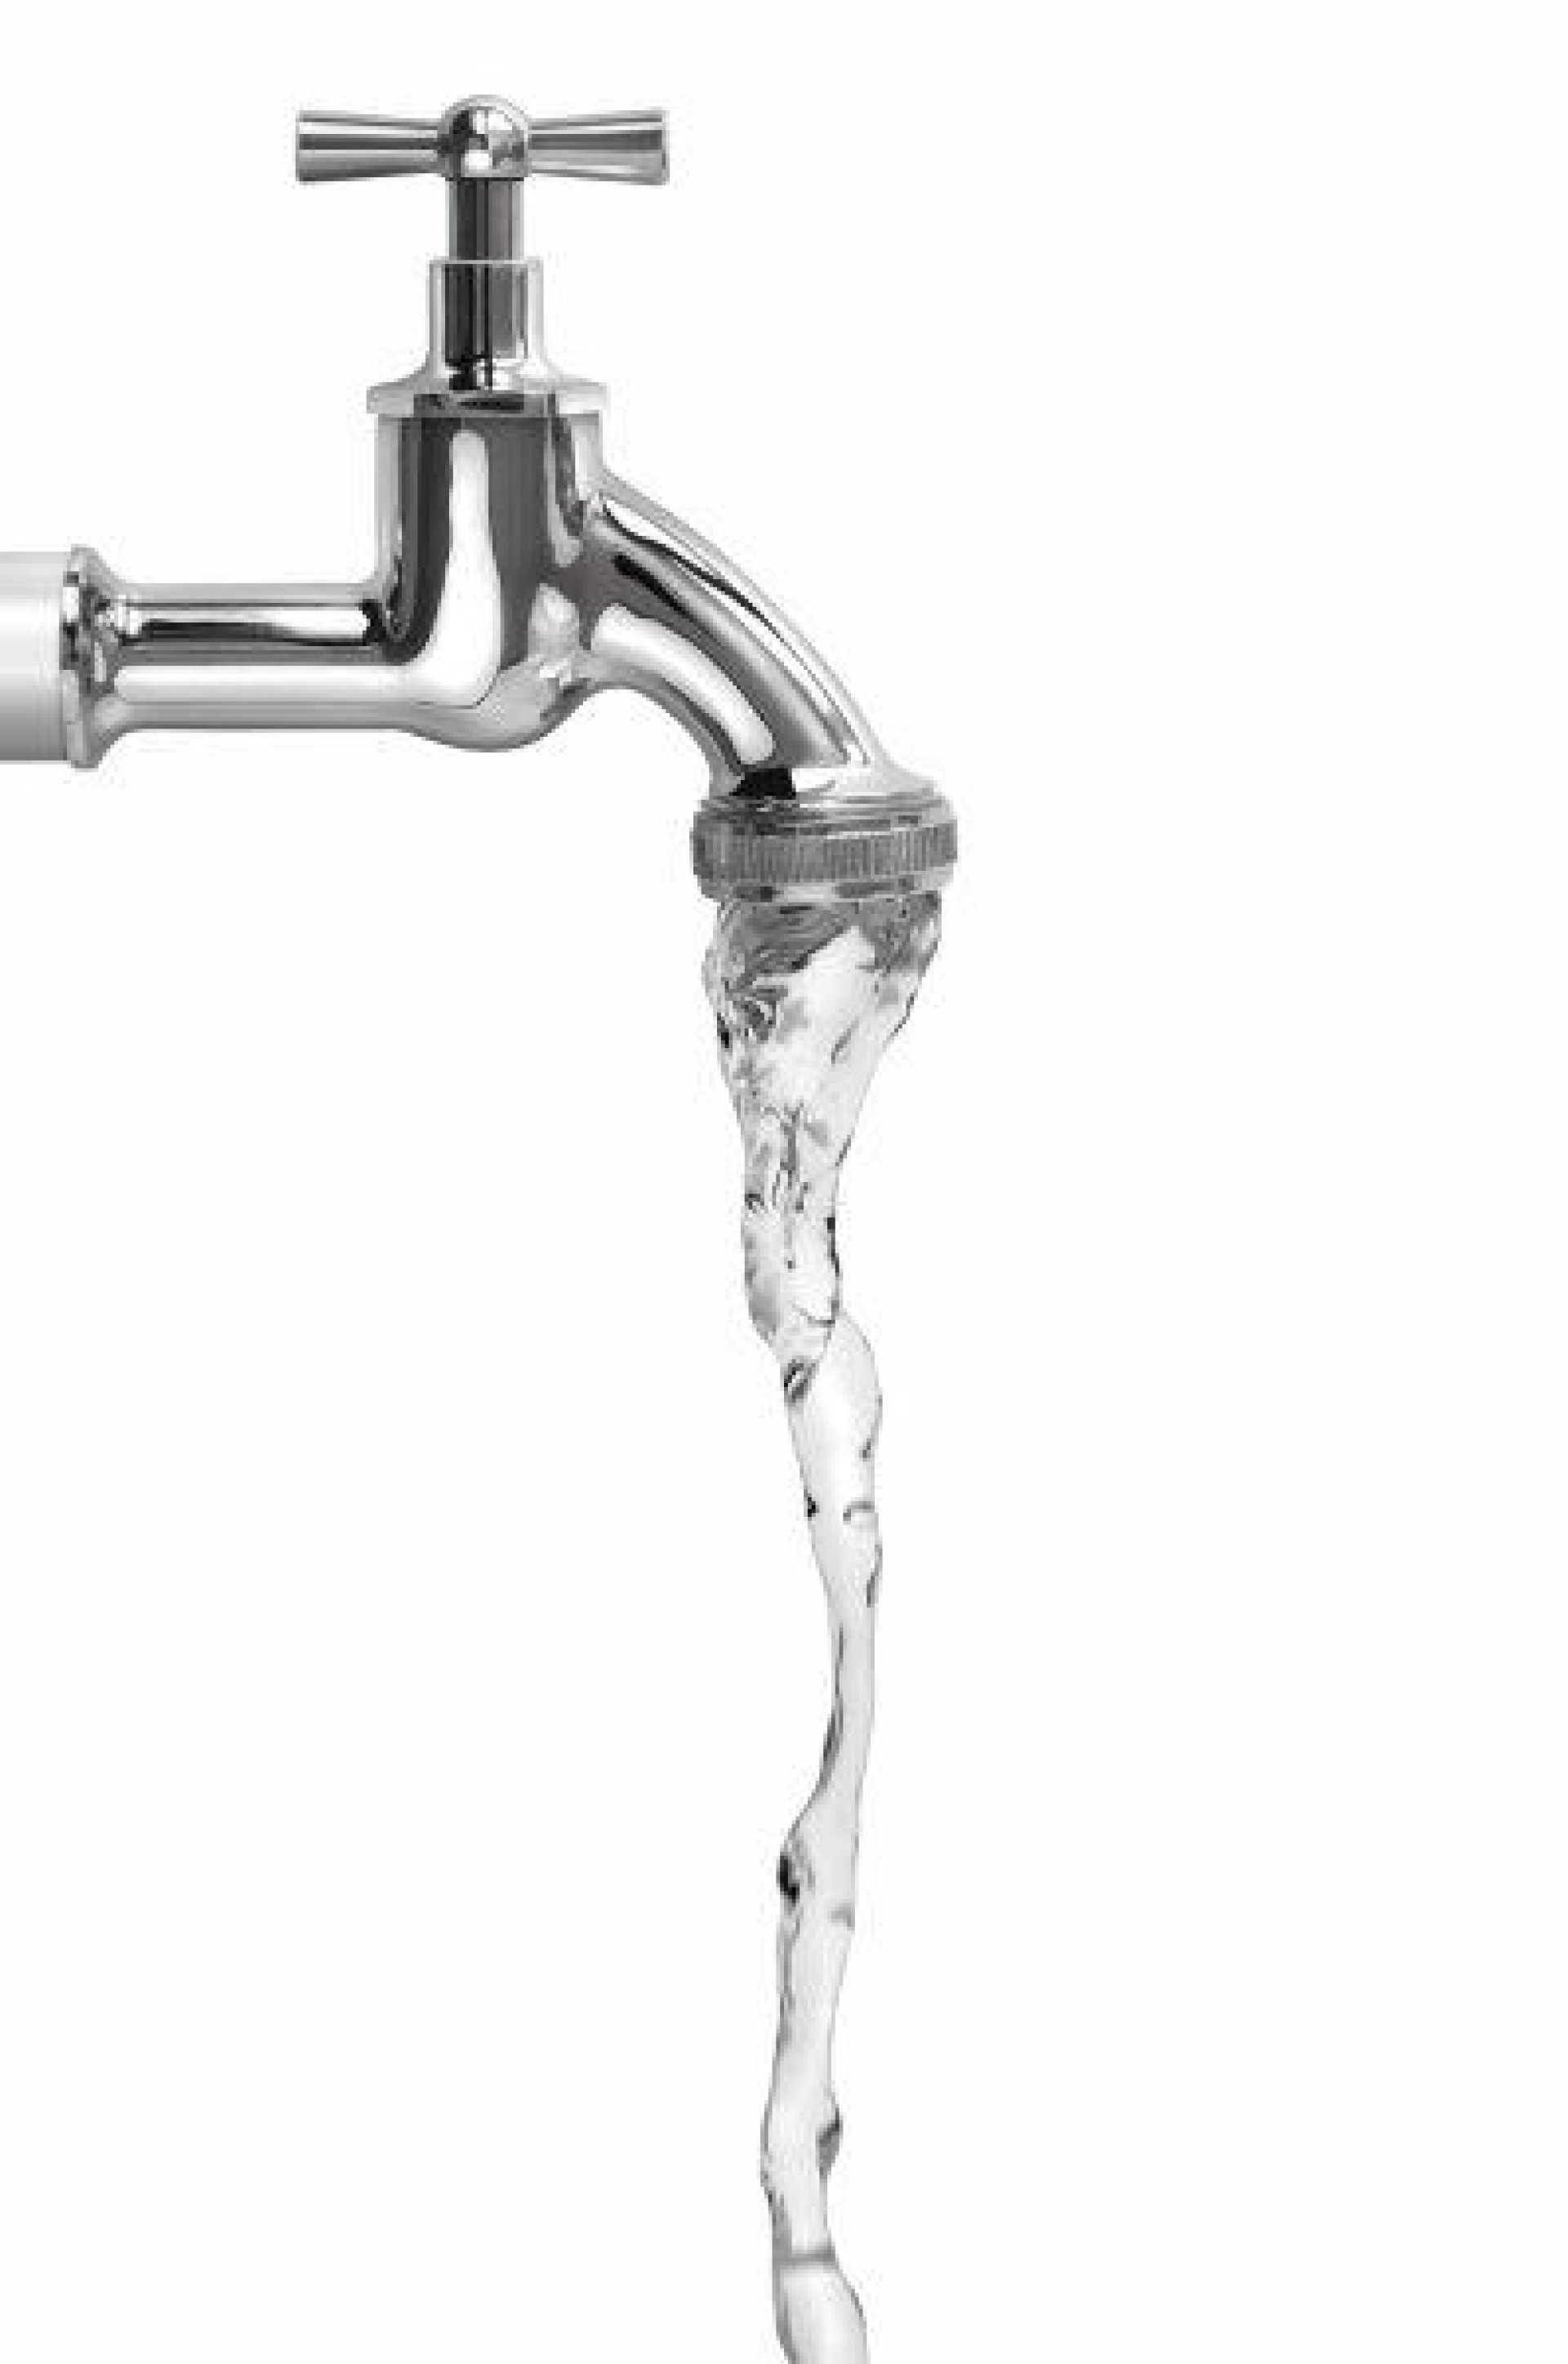 faucet-drinking-water-legionella.jpg